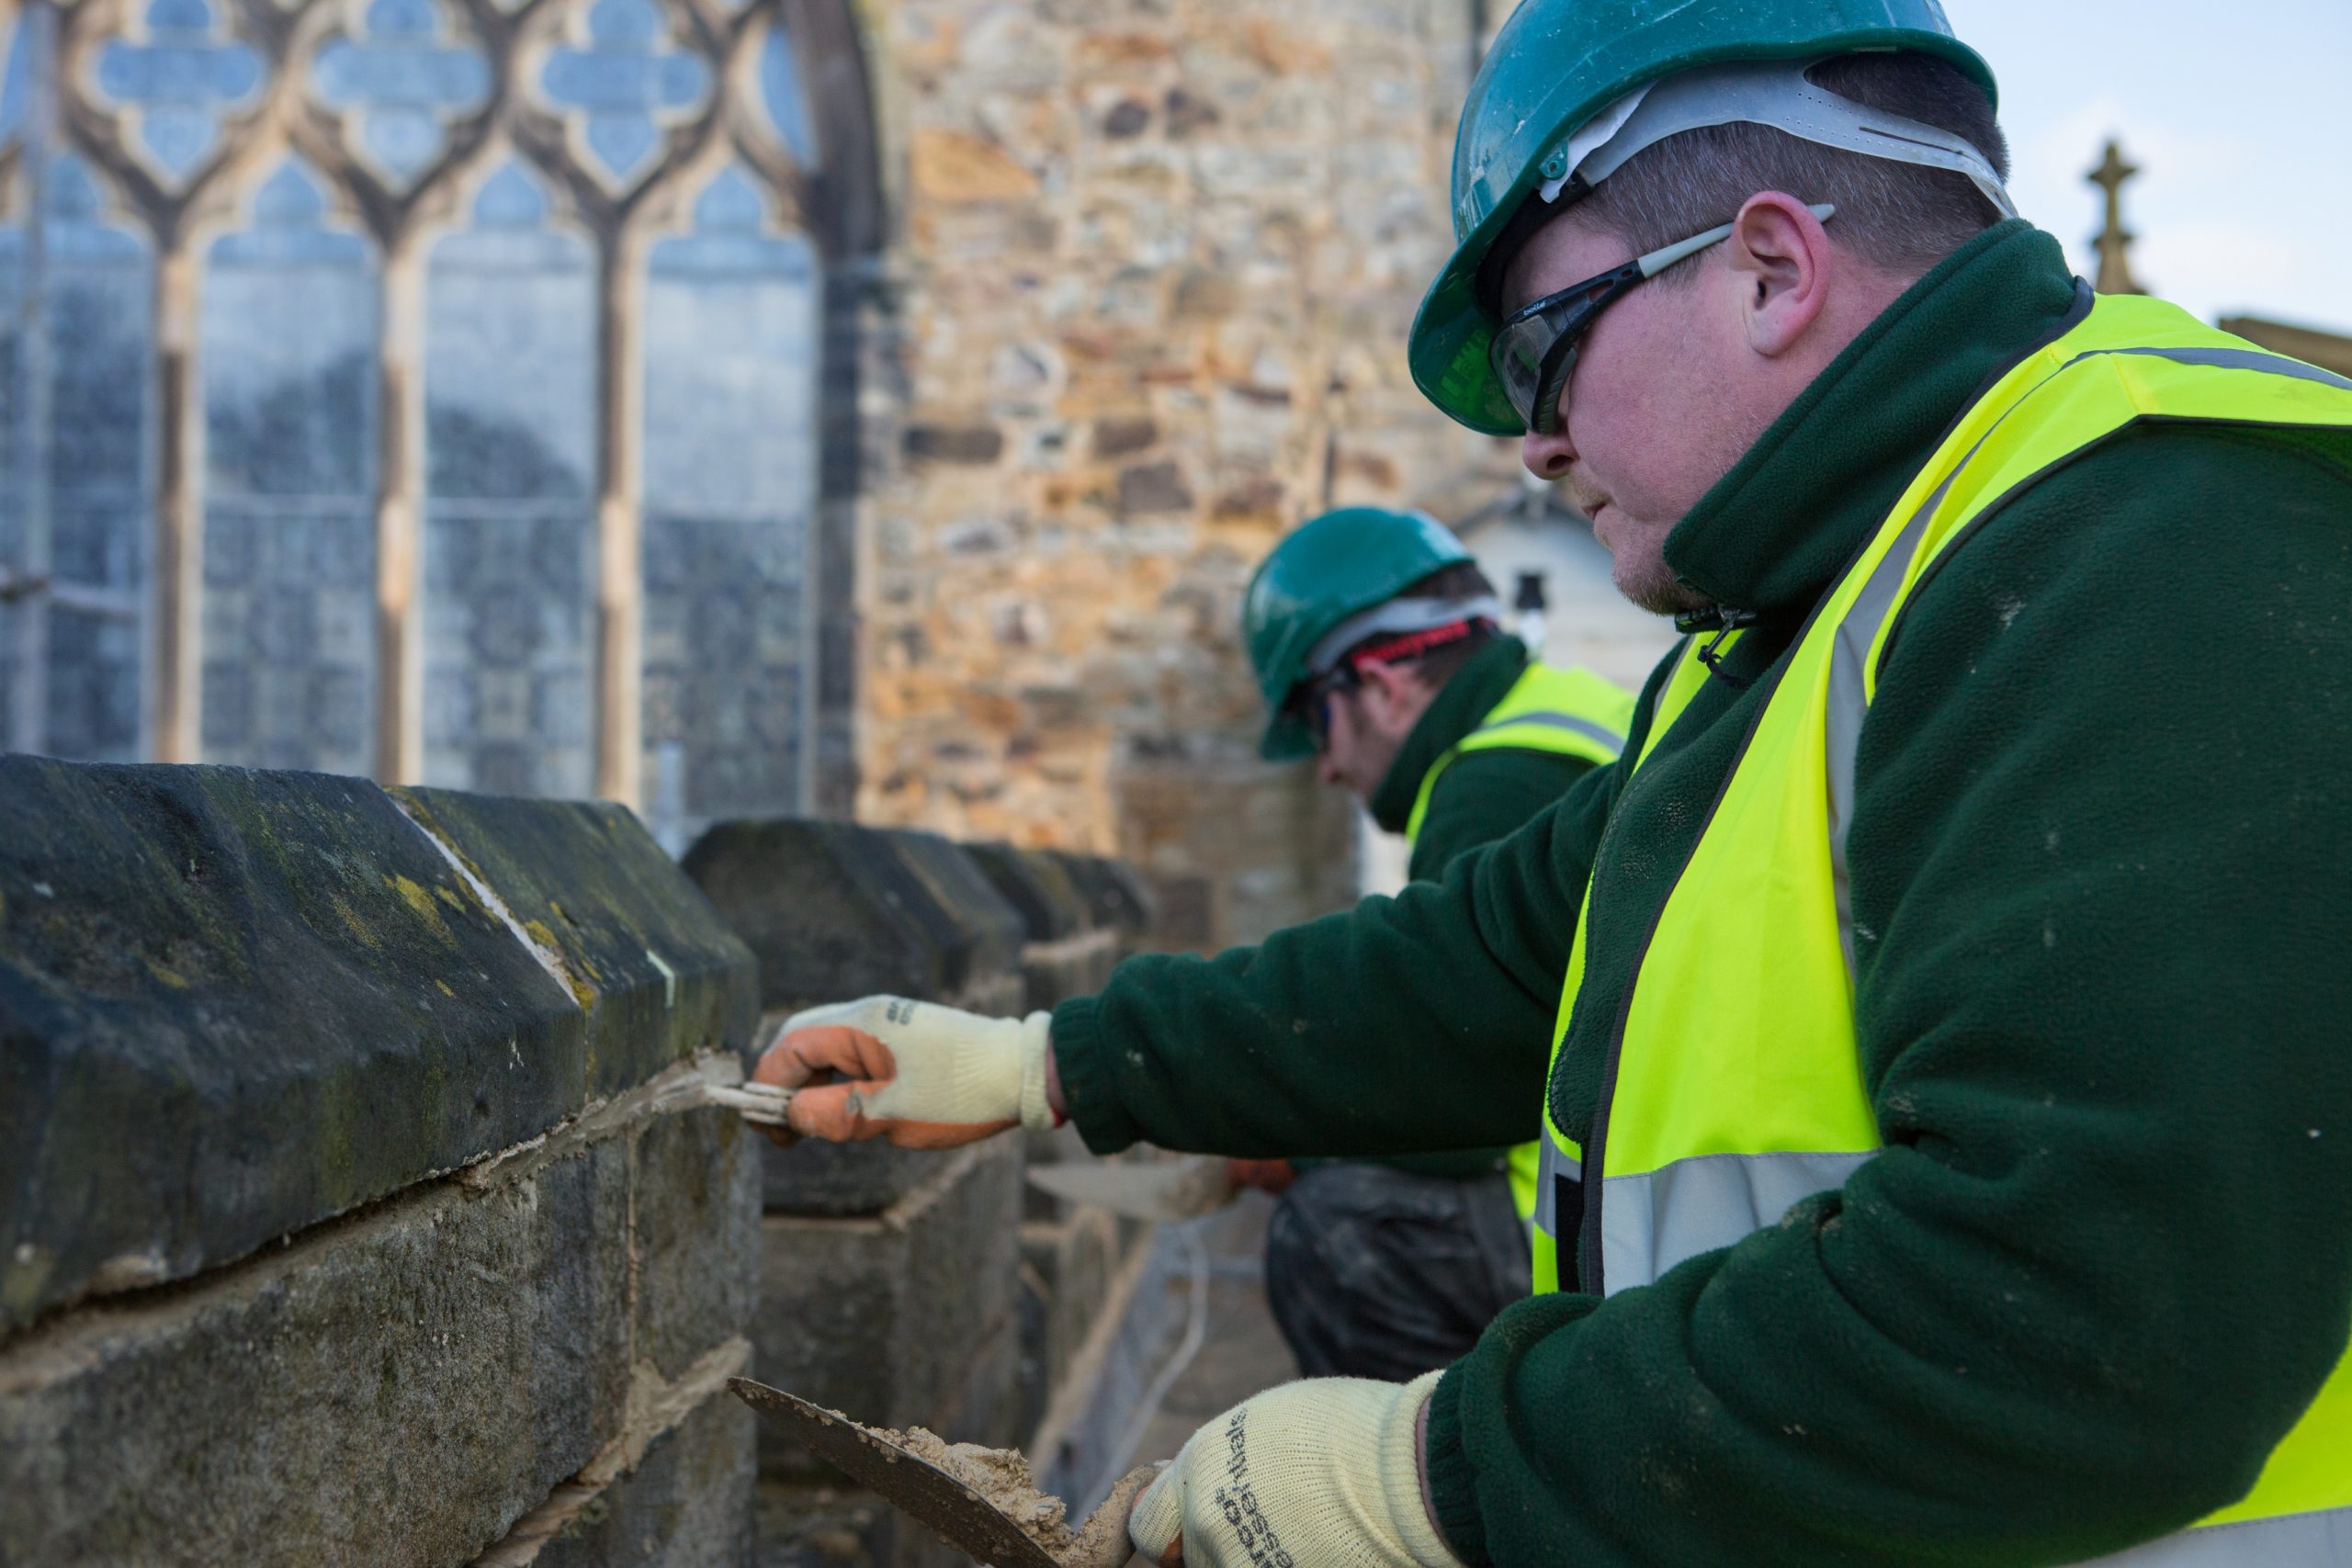 Castle restoration work takes regional award